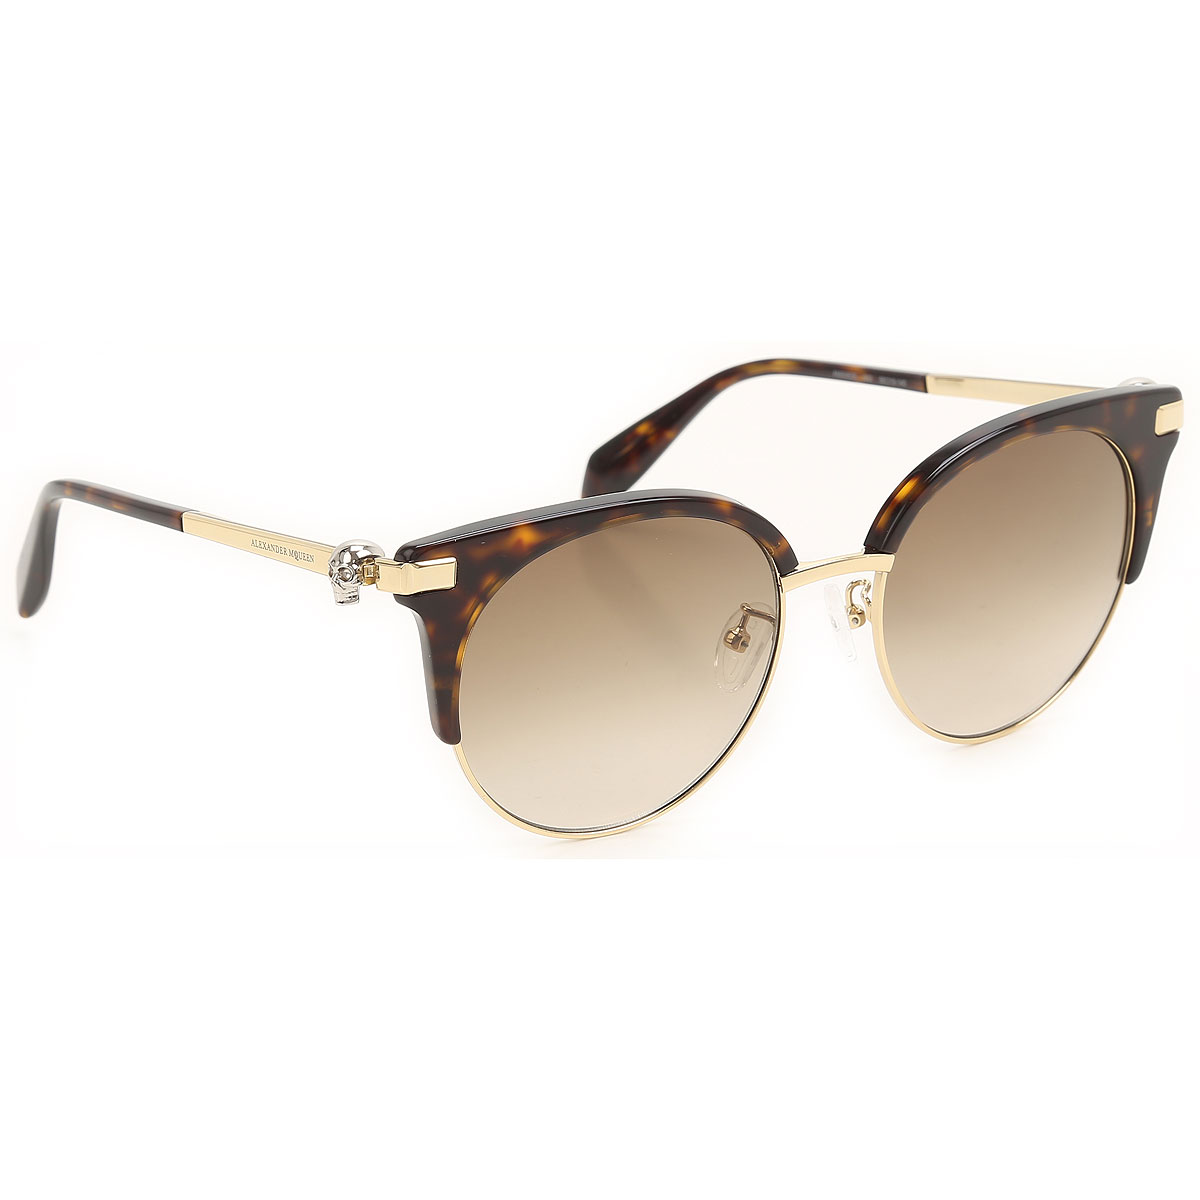 Sunglasses Alexander McQueen, Style code: am0082s-002-N14